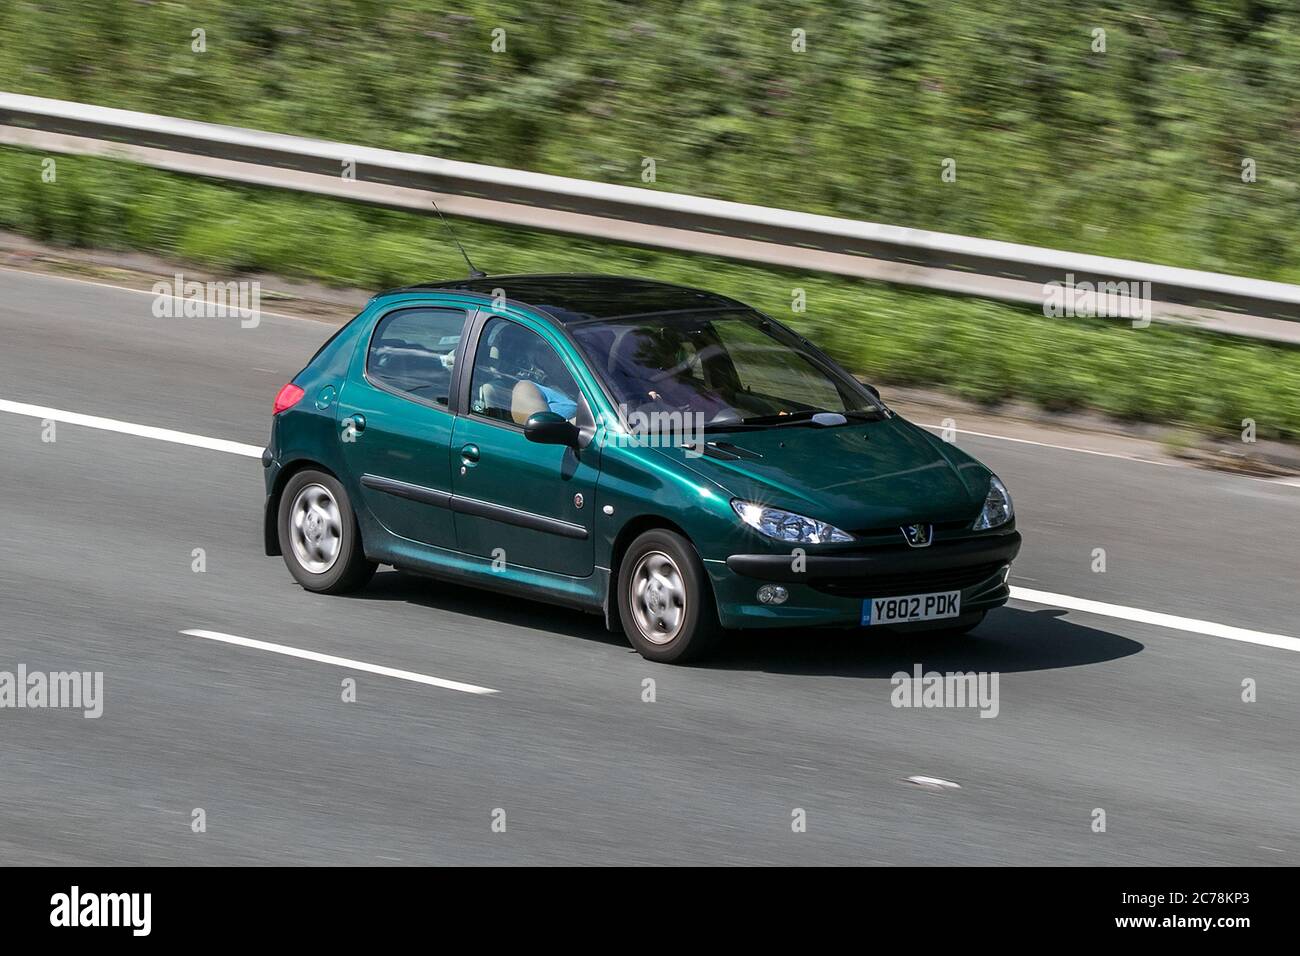 Peugeot 206 light tuning (last part Stock Photo - Alamy